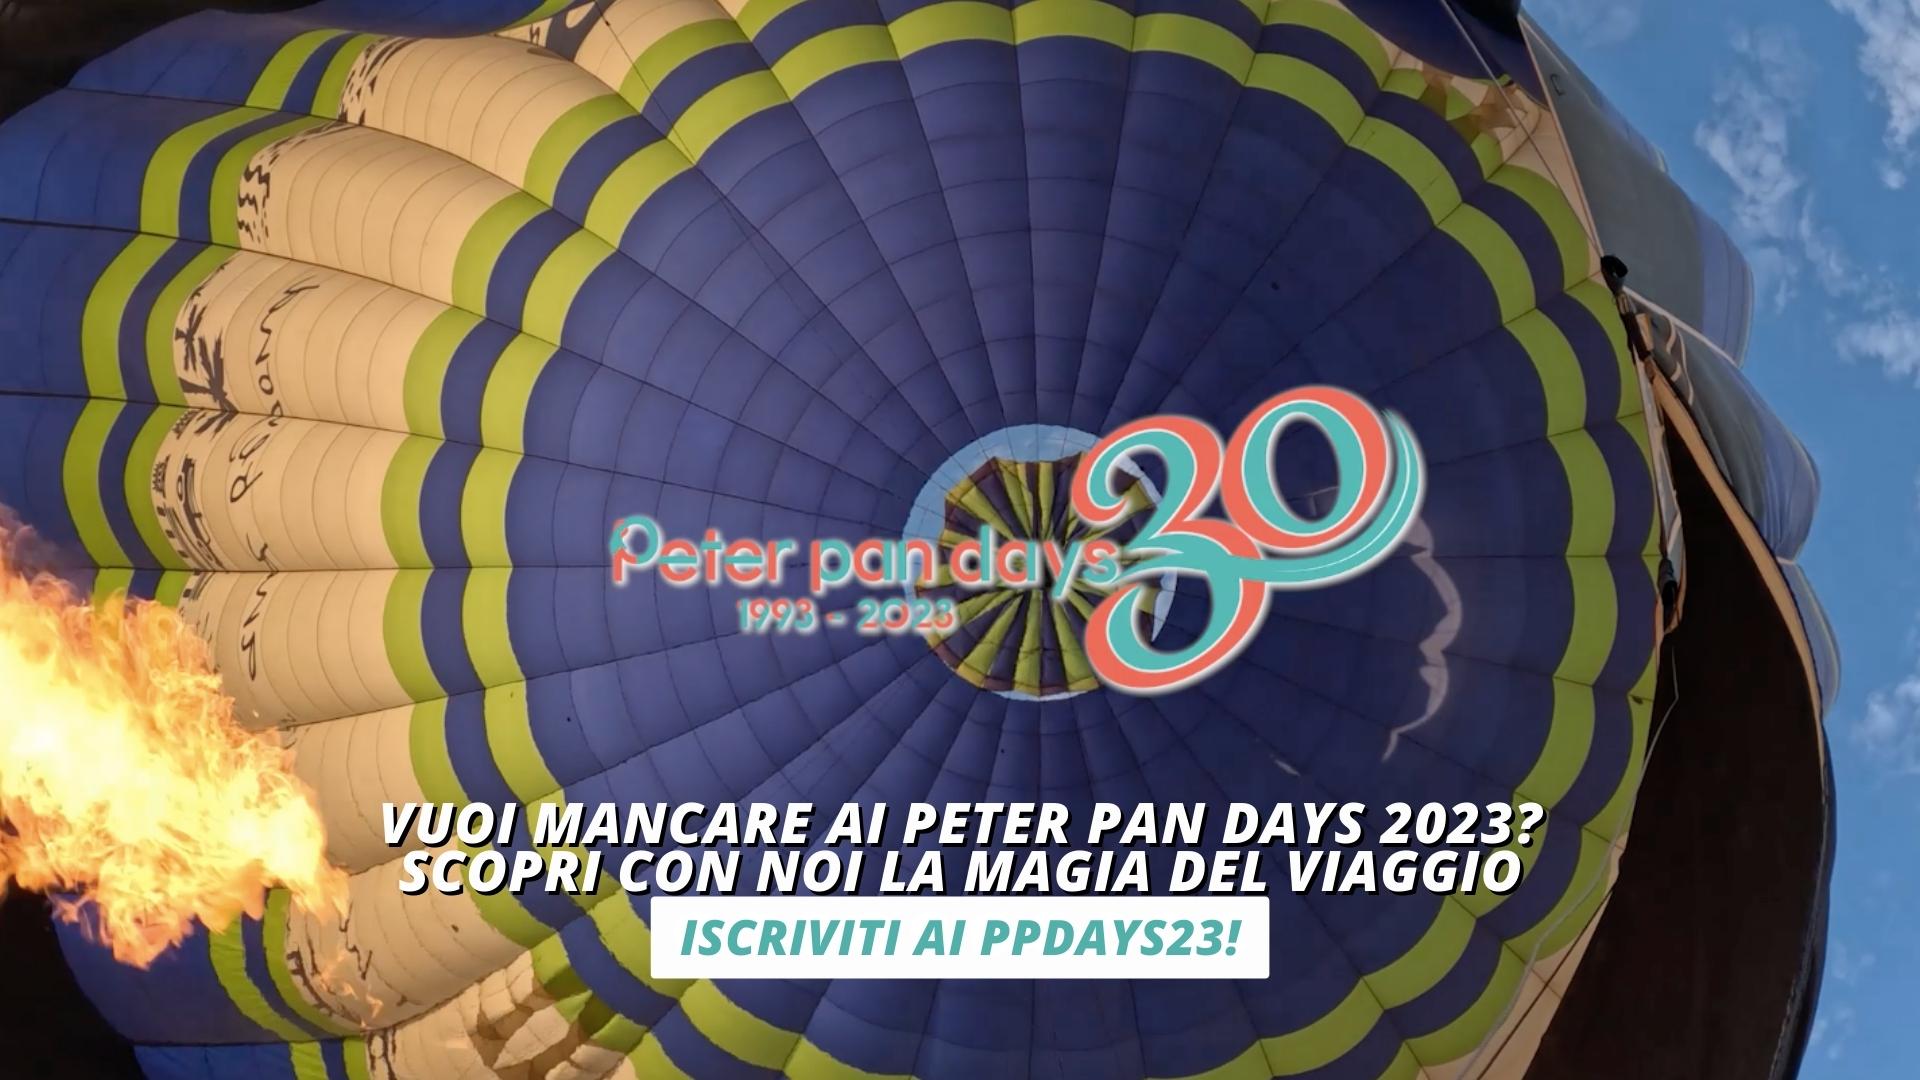 Peter Pan Animazione - iscriviti ai ppdays23!